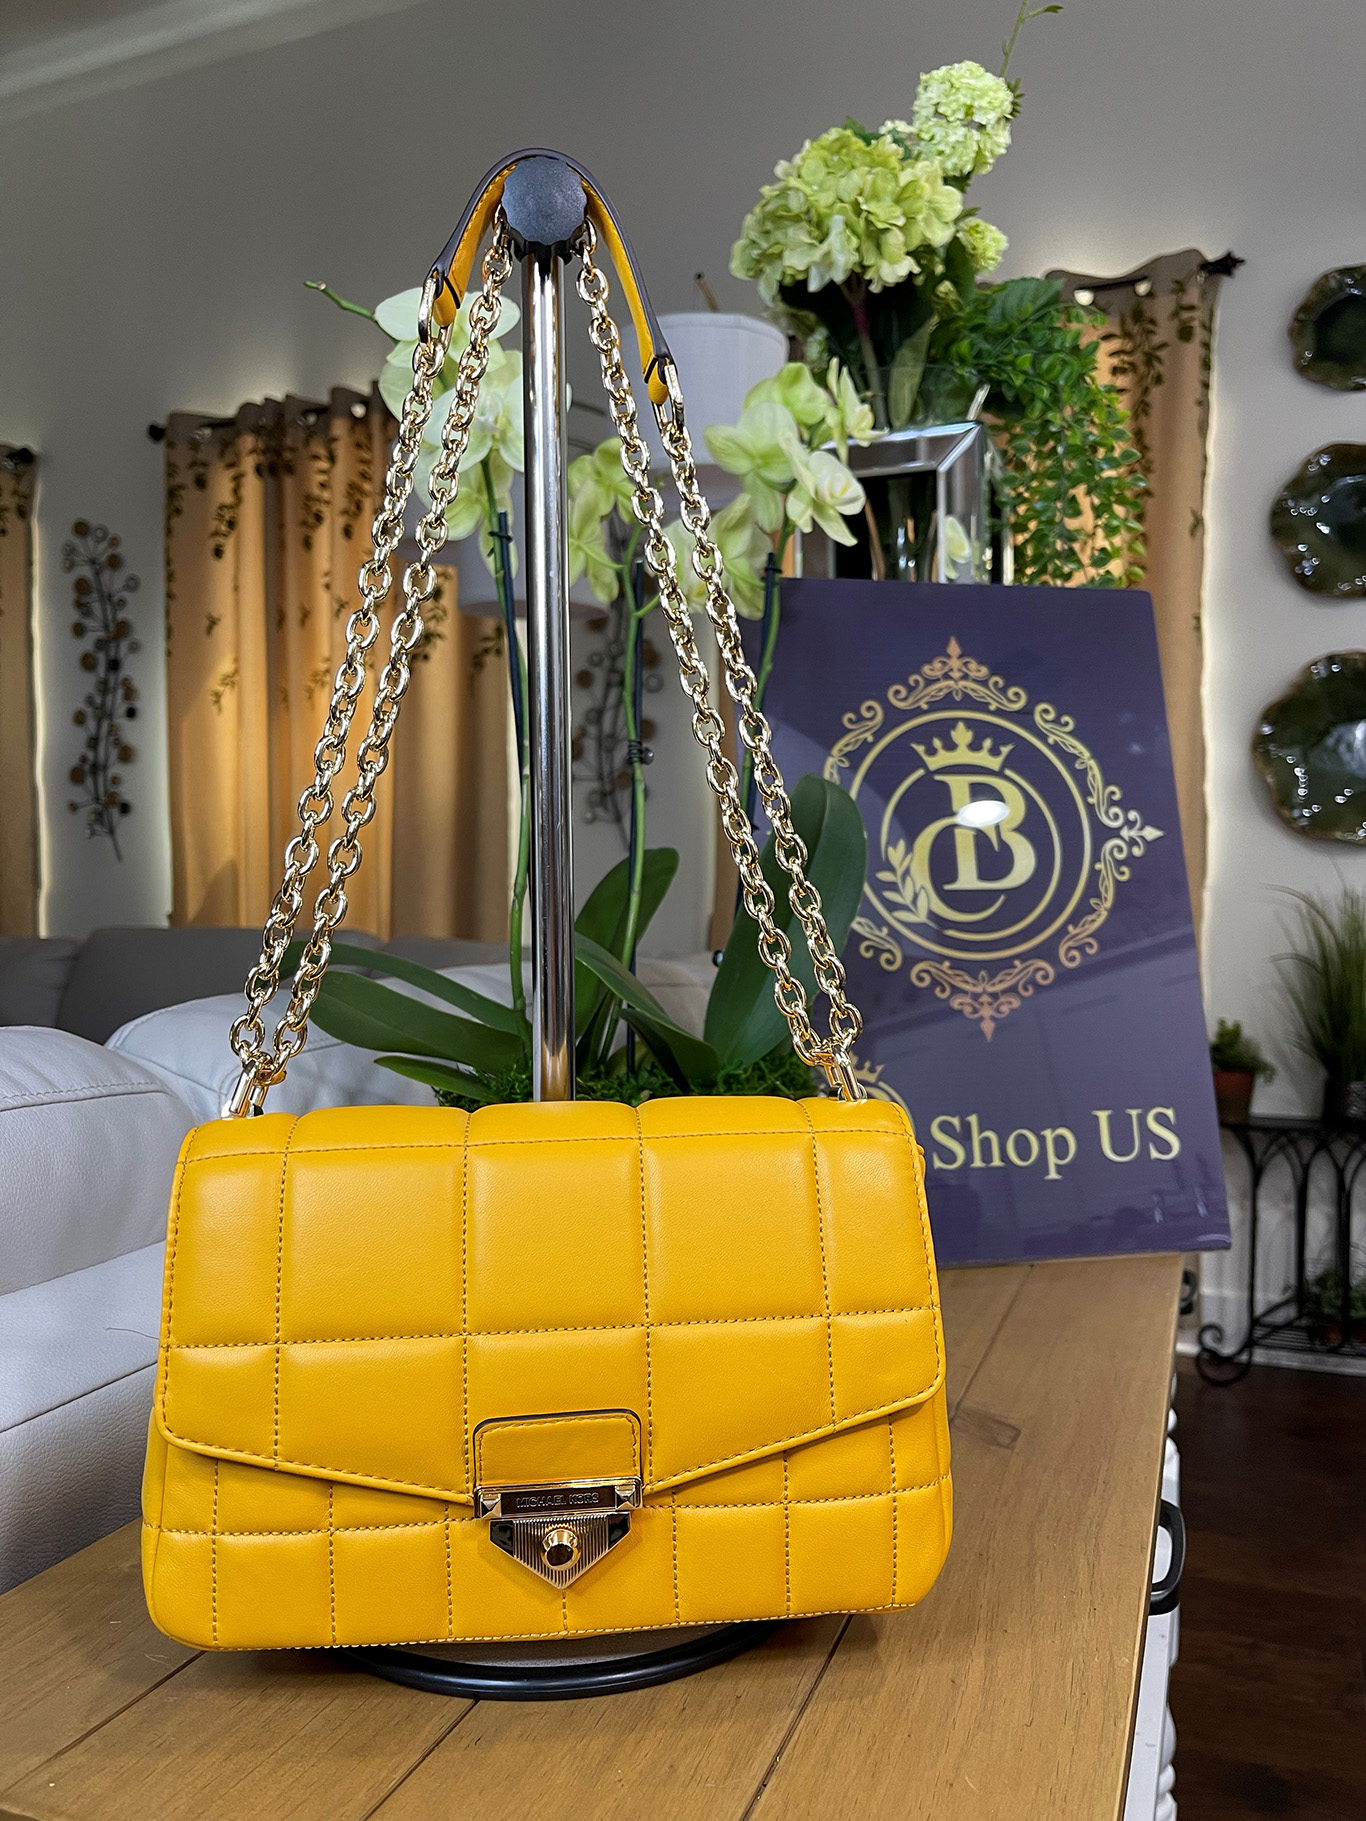 Michael Kors Yellow Handbags  ShopStyle